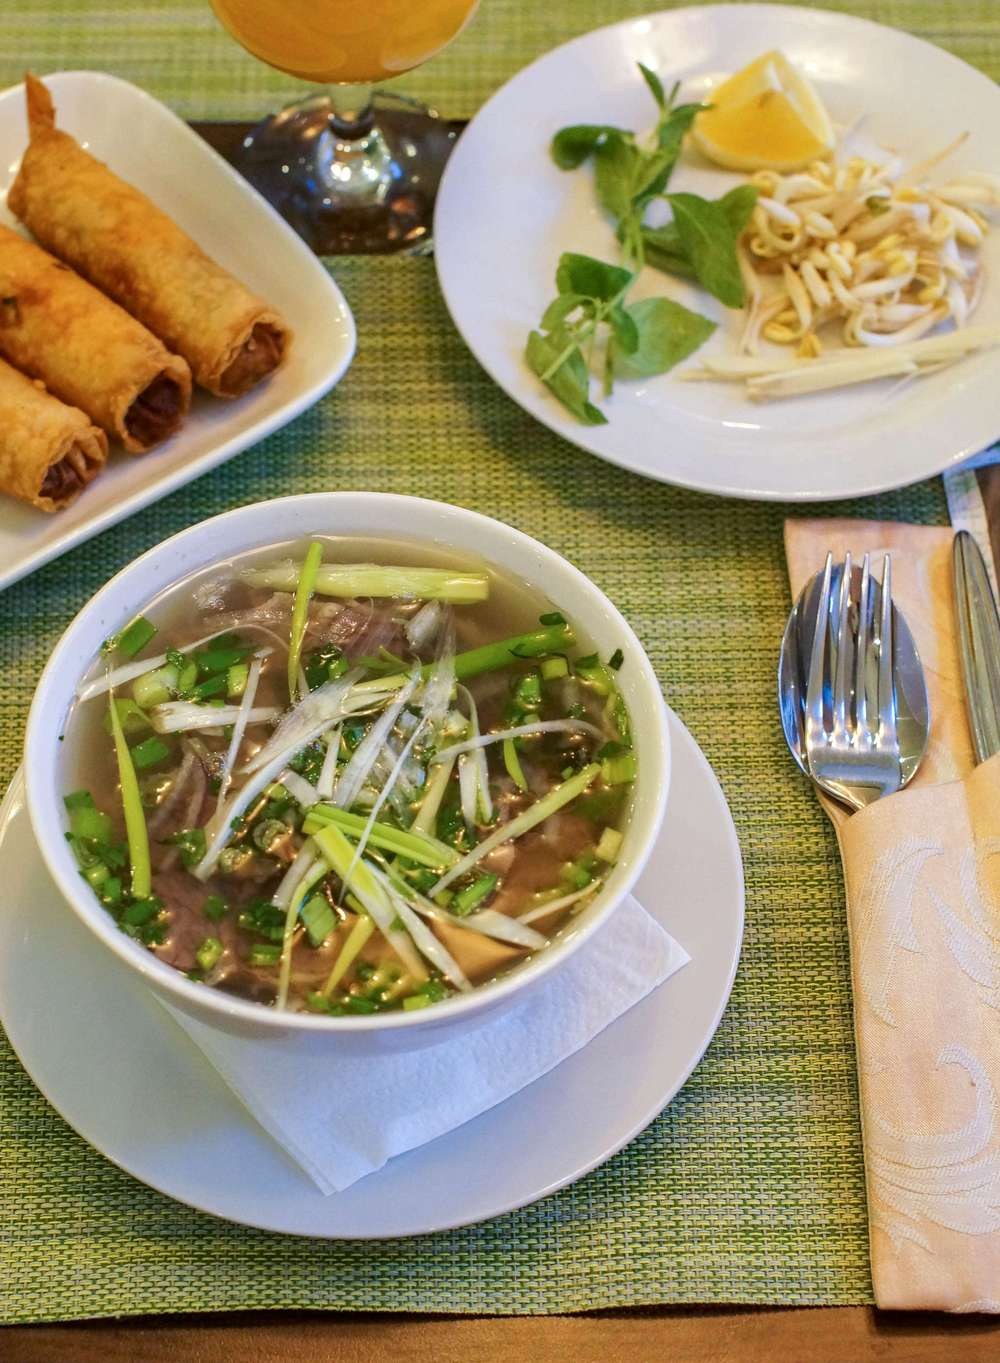 вьетнамская кухня картинки